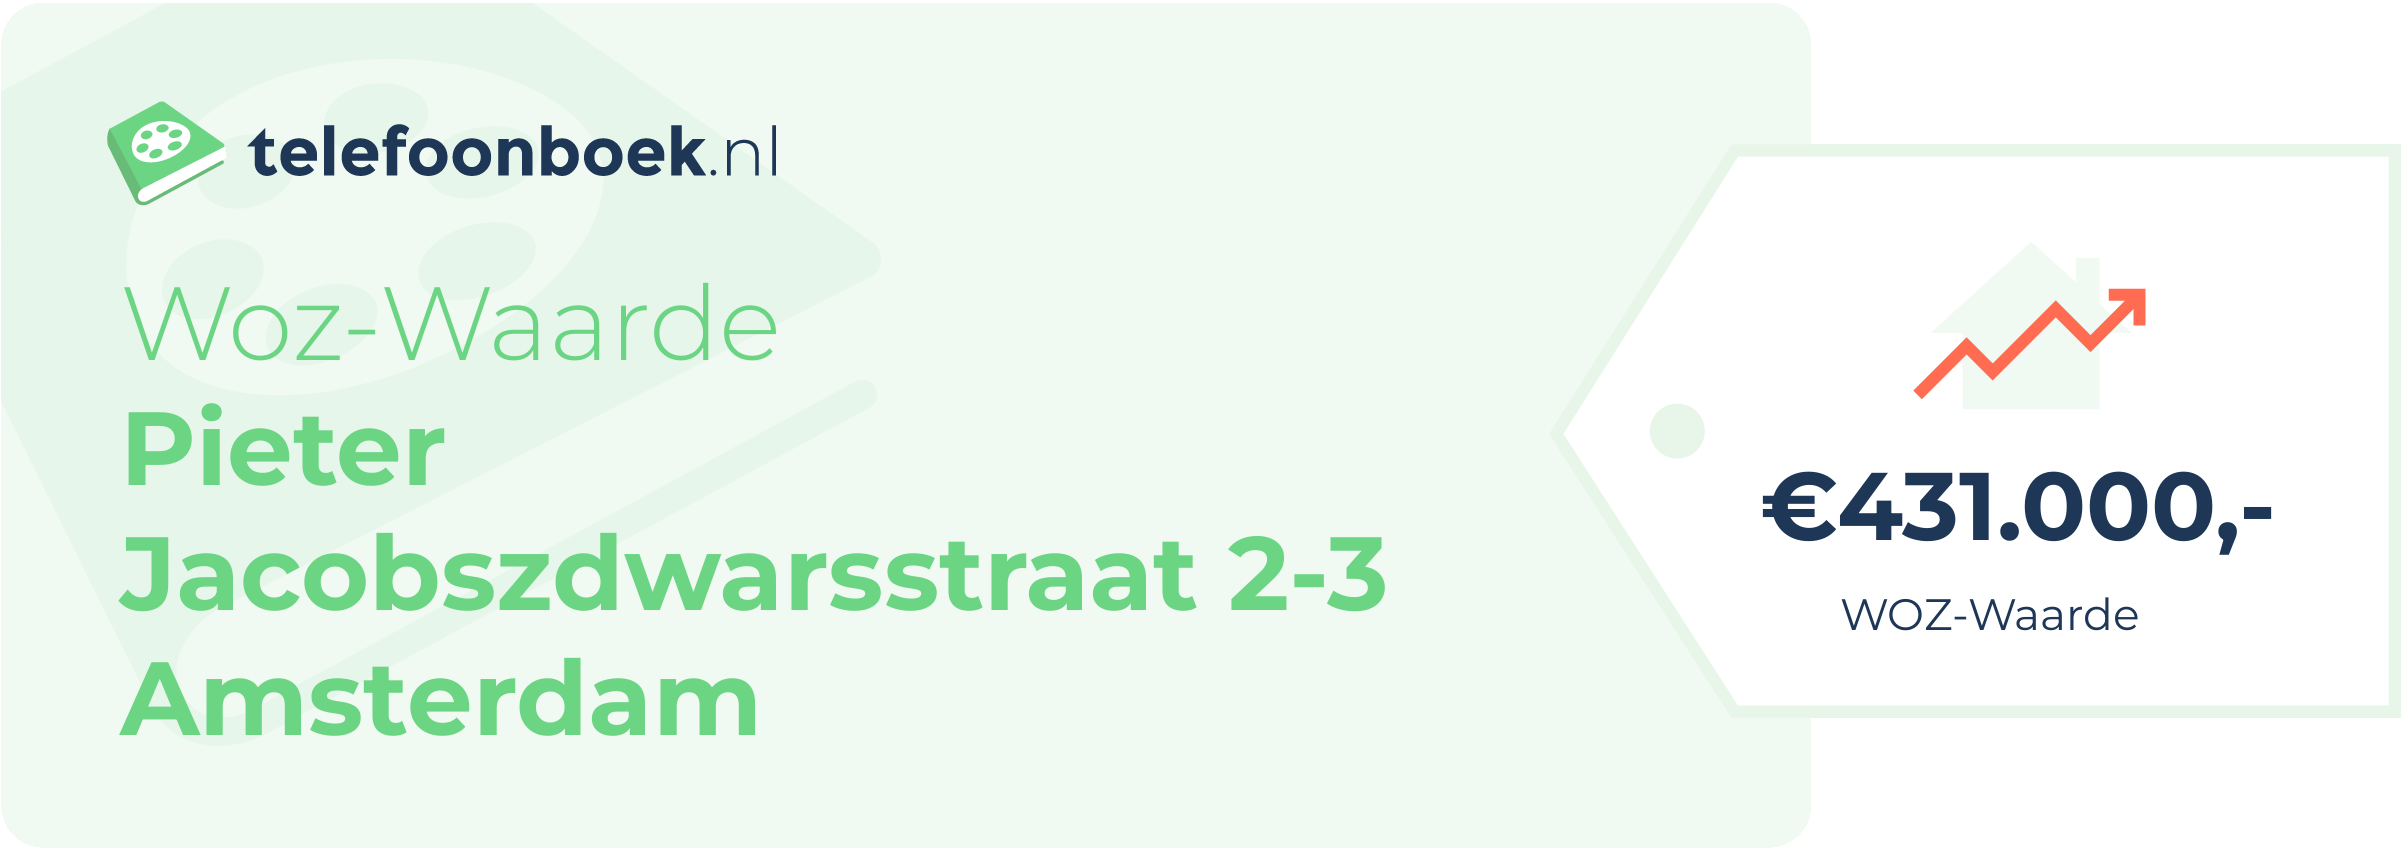 WOZ-waarde Pieter Jacobszdwarsstraat 2-3 Amsterdam